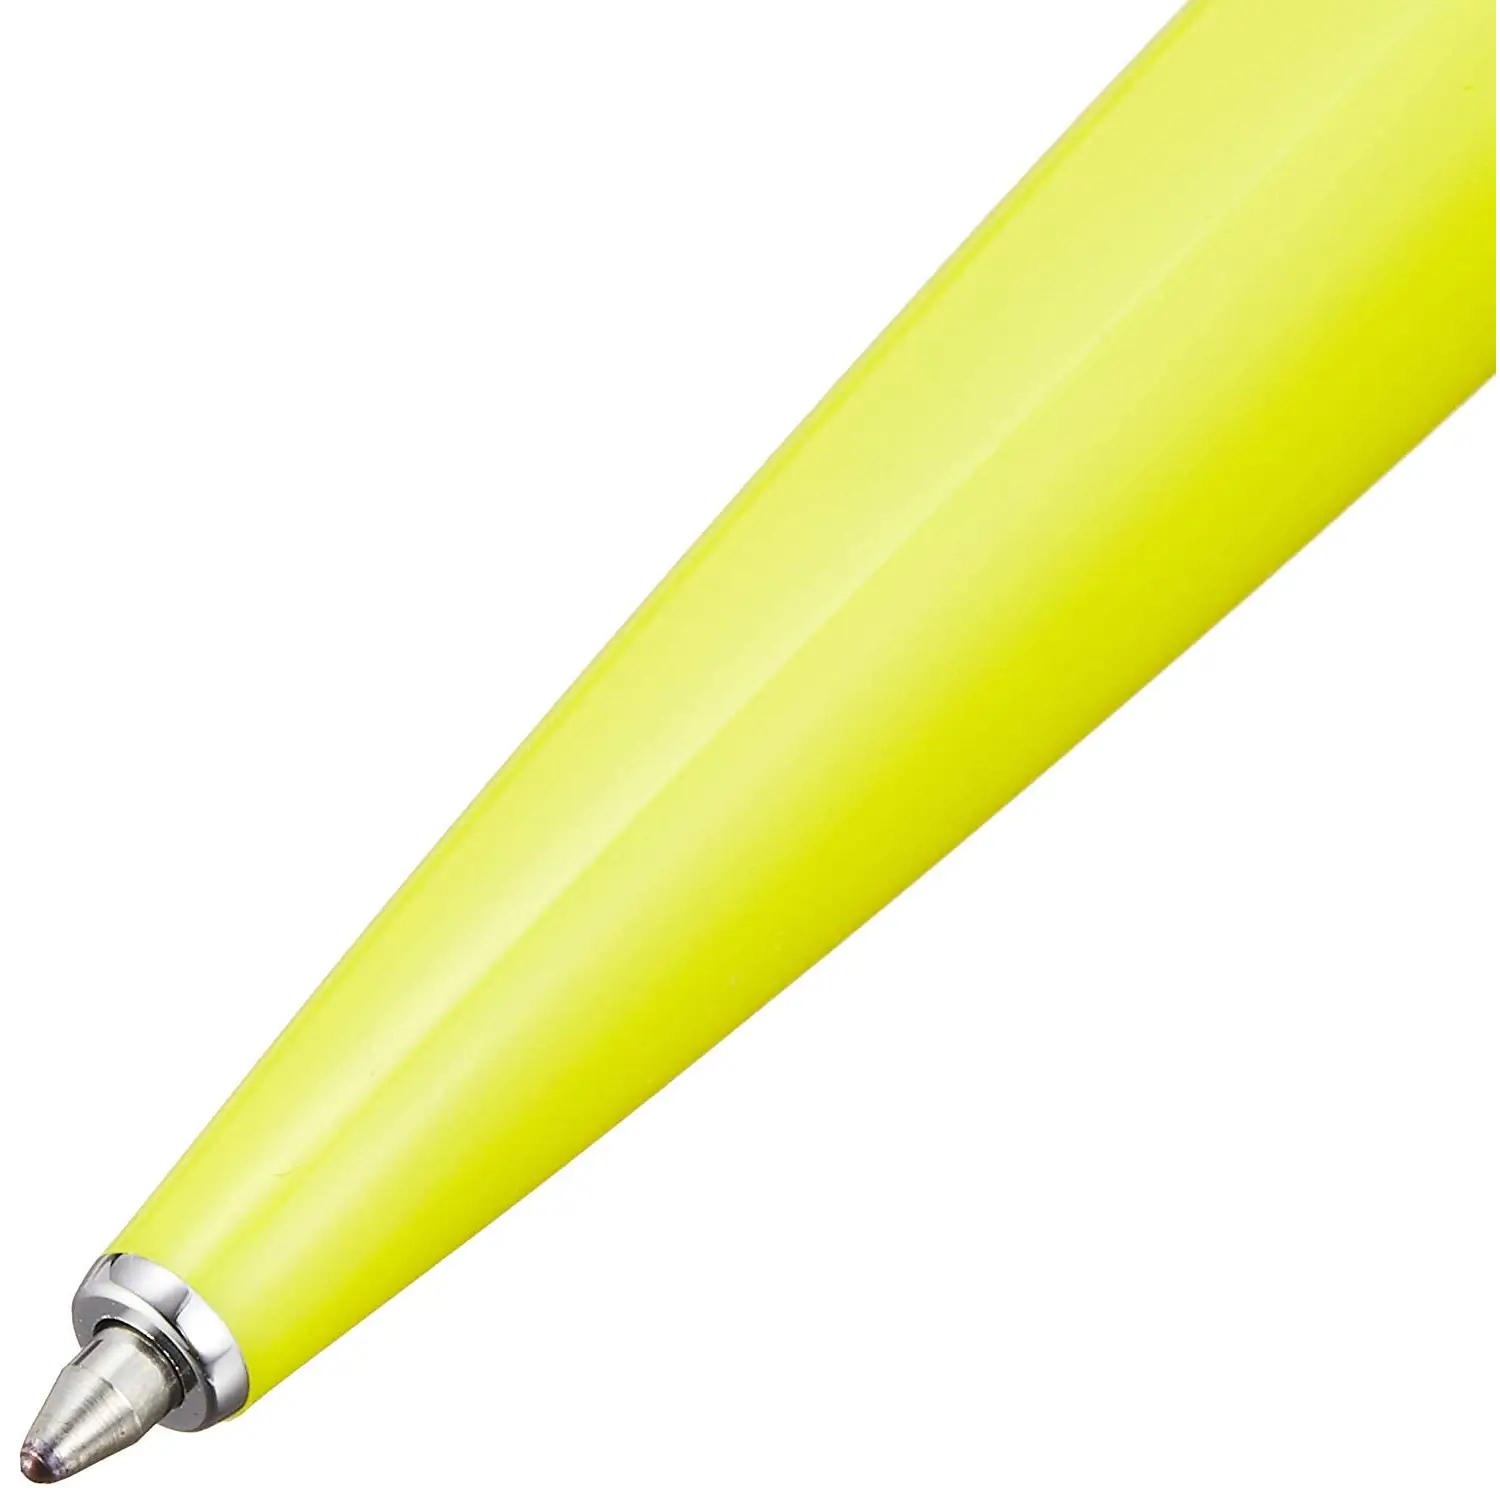 S.T. Dupont Jet 8 Ballpoint Pen in Sunny Yellow - Misc